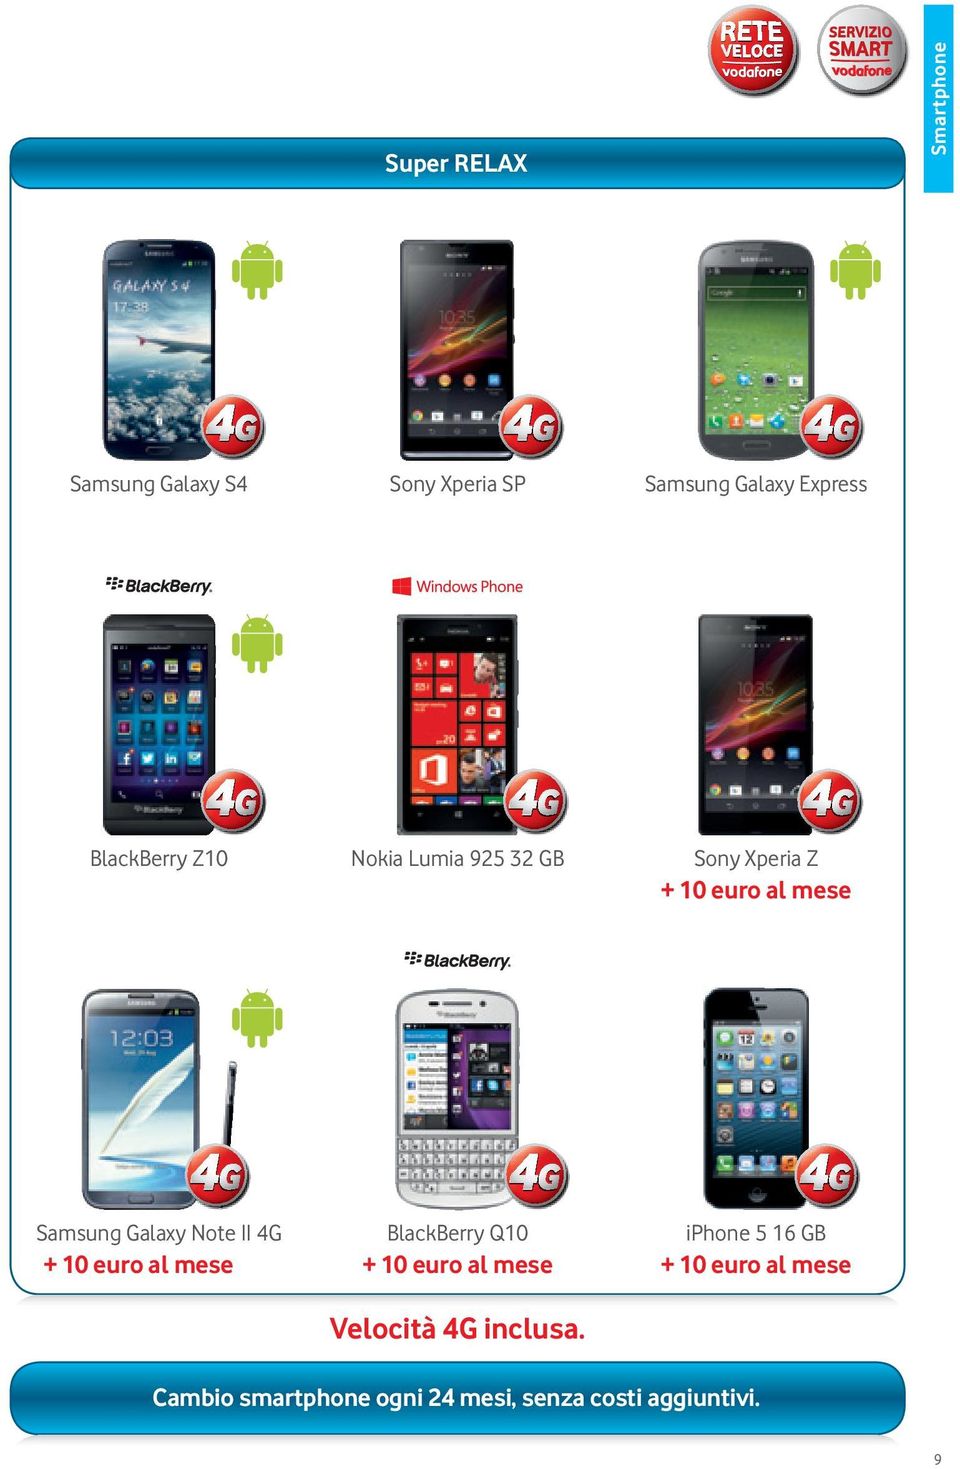 Note II 4G BlackBerry Q10 iphone 5 16 GB + 10 euro al mese + 10 euro al mese + 10